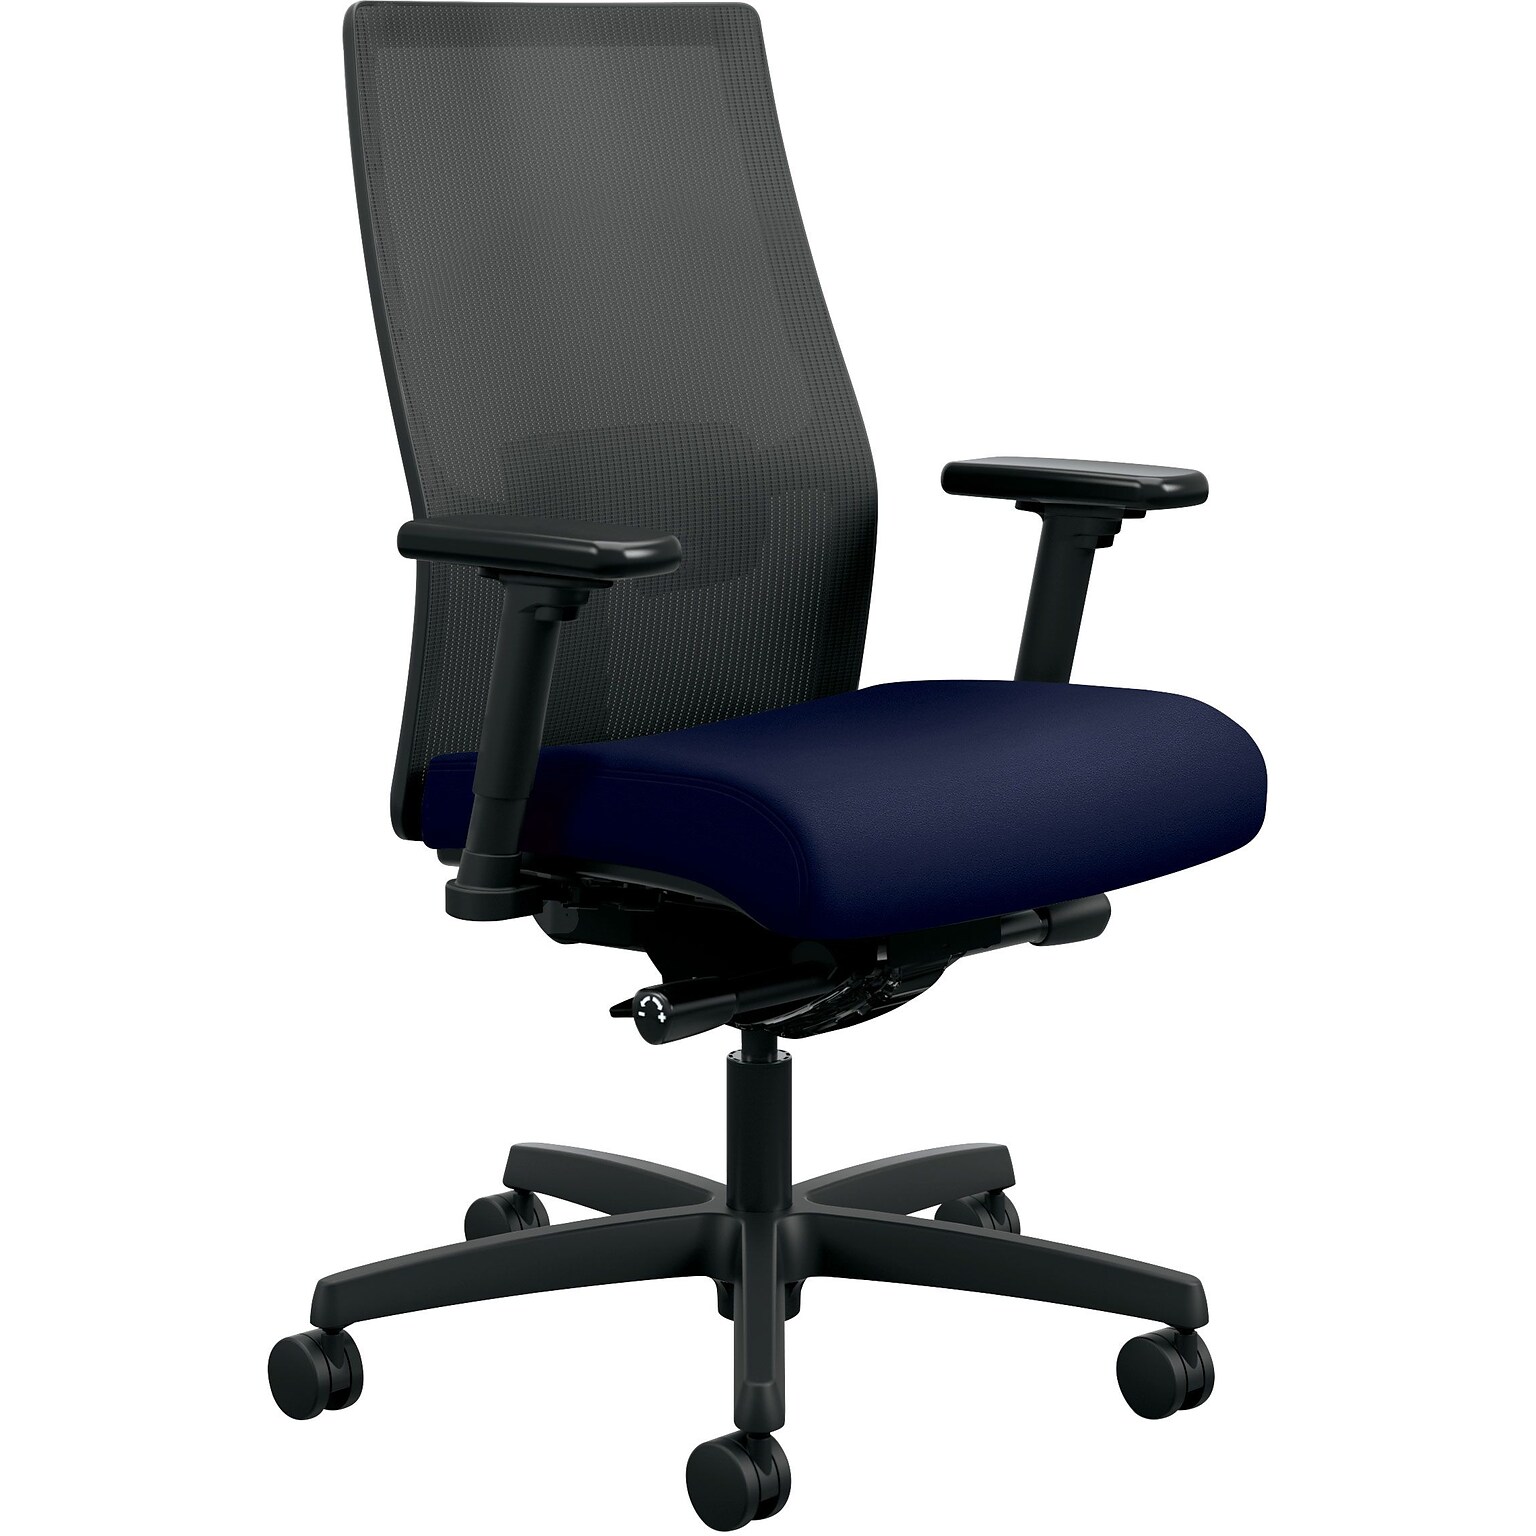 HON Ignition ilira-Stretch Mesh Back Task Chair, 20.0W x 19.0D, 19.0W x 29.0H, Navy